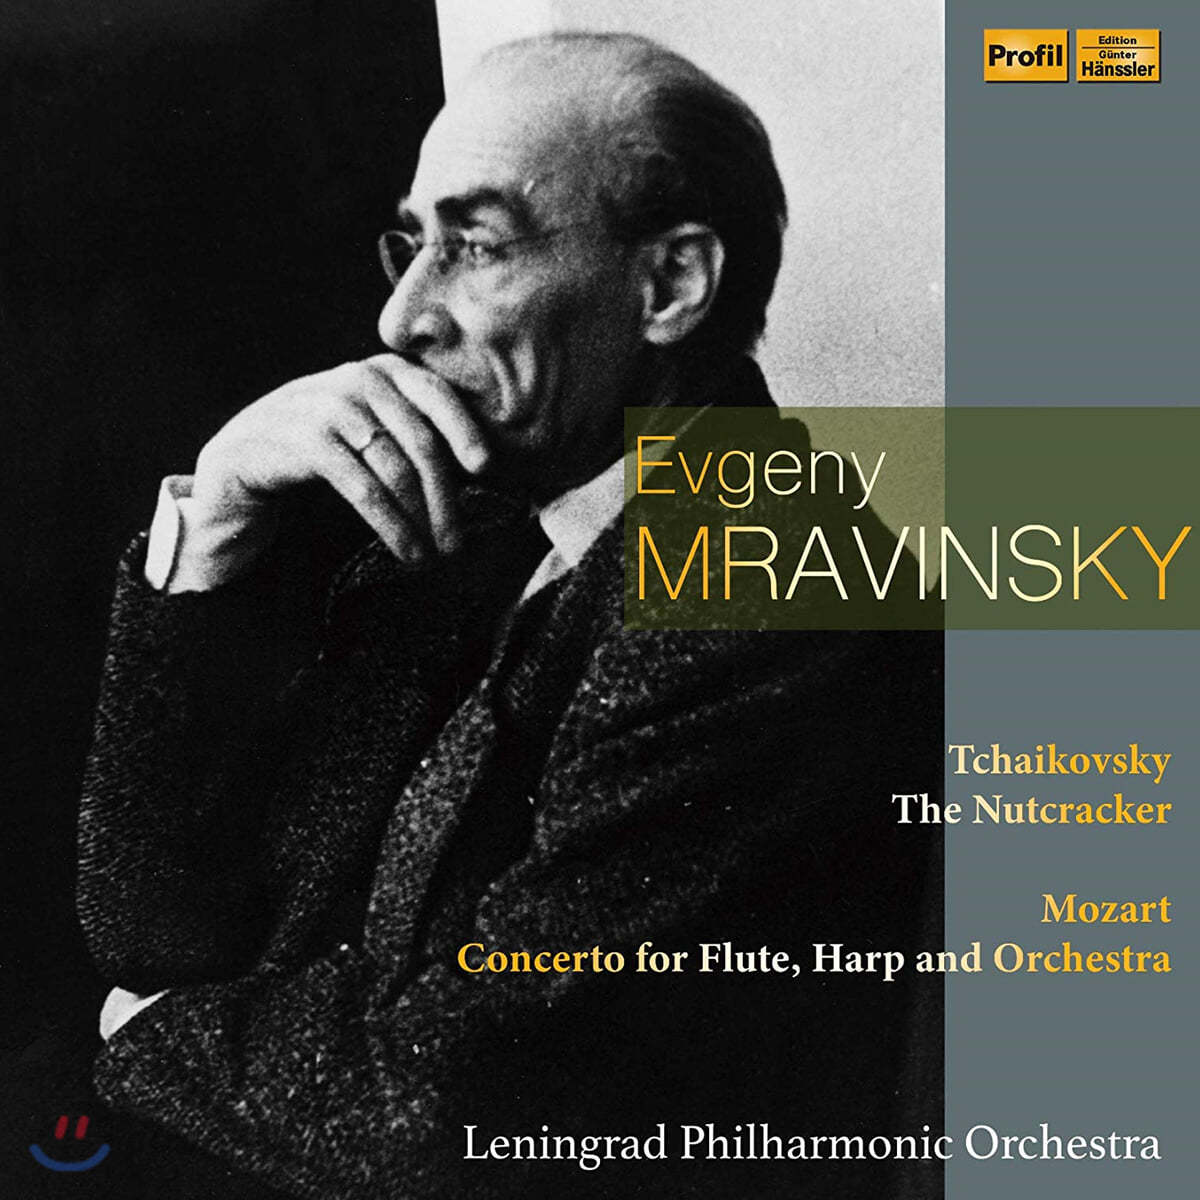 Evgeny Mravinsky 차이코프스키: 호두까기 인형 중 13곡 / 모차르트: 플룻과 하프를 위한 협주곡 (Tchaikovksy: The Nutcracker / Mozart: Concerto for Flute, Harp and Orchestra)